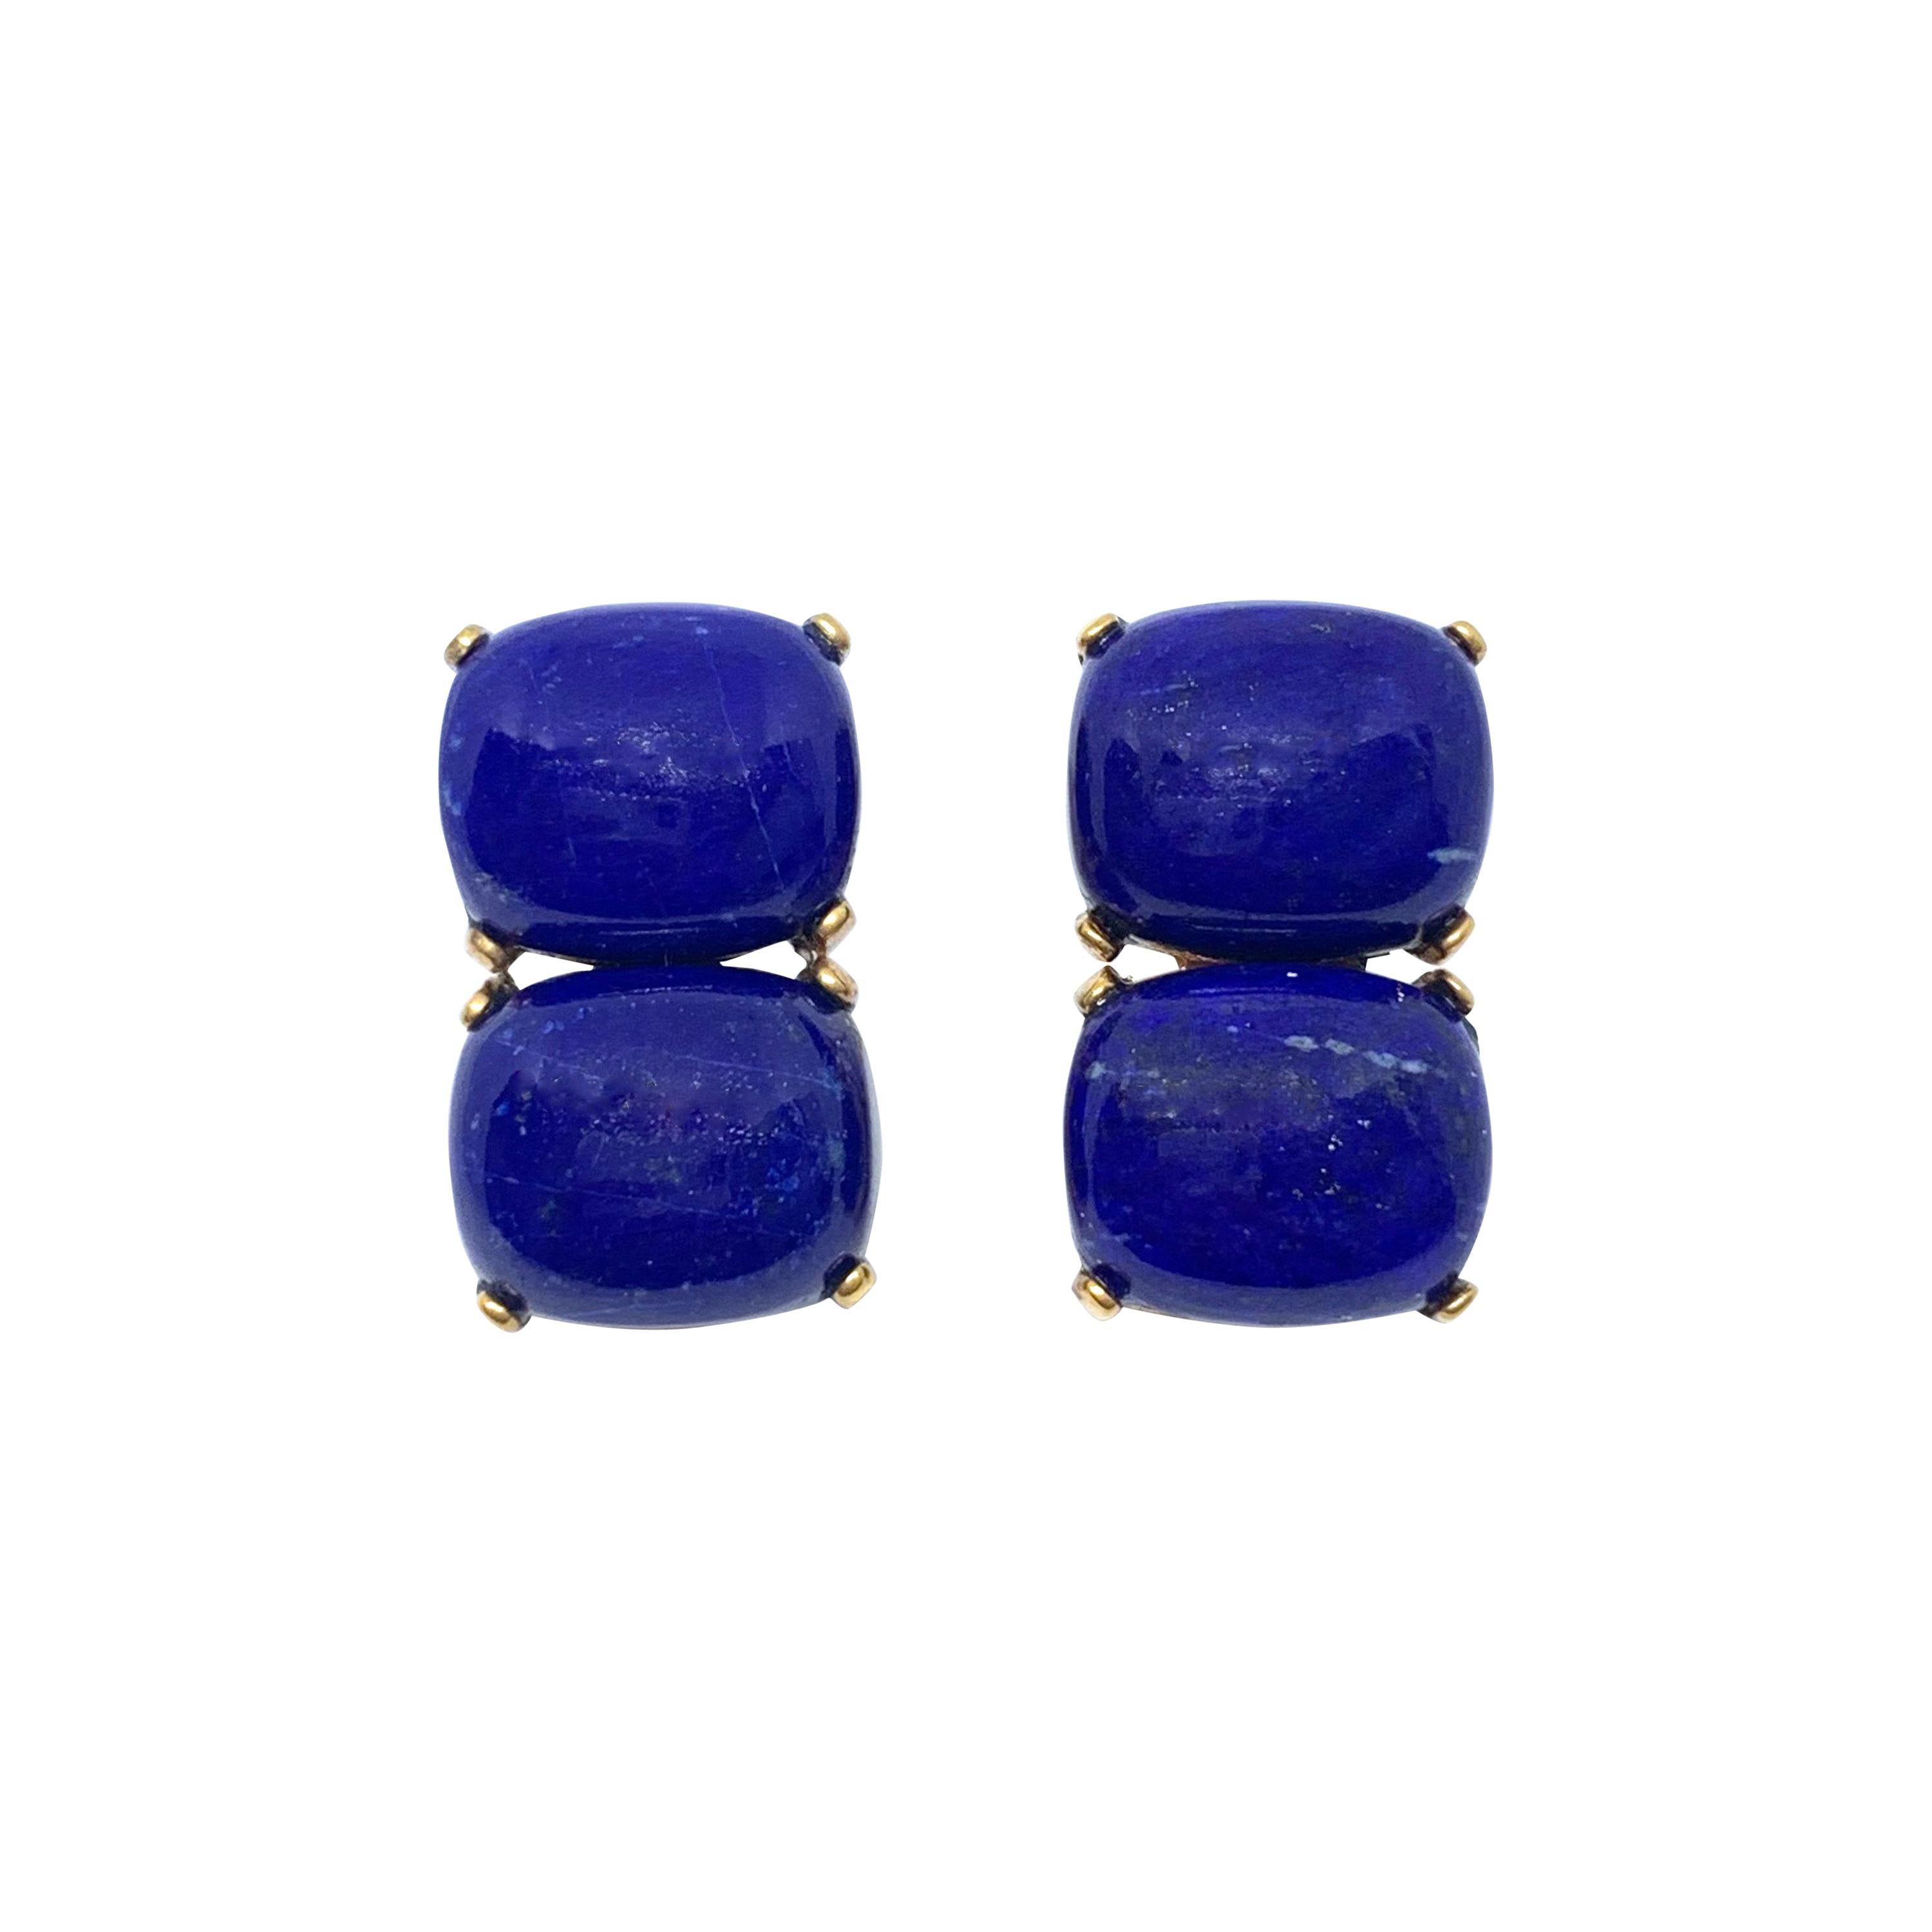 Stunning pair of Double Cushion Cabochon Lapis Lazuli Vermeil Earrings